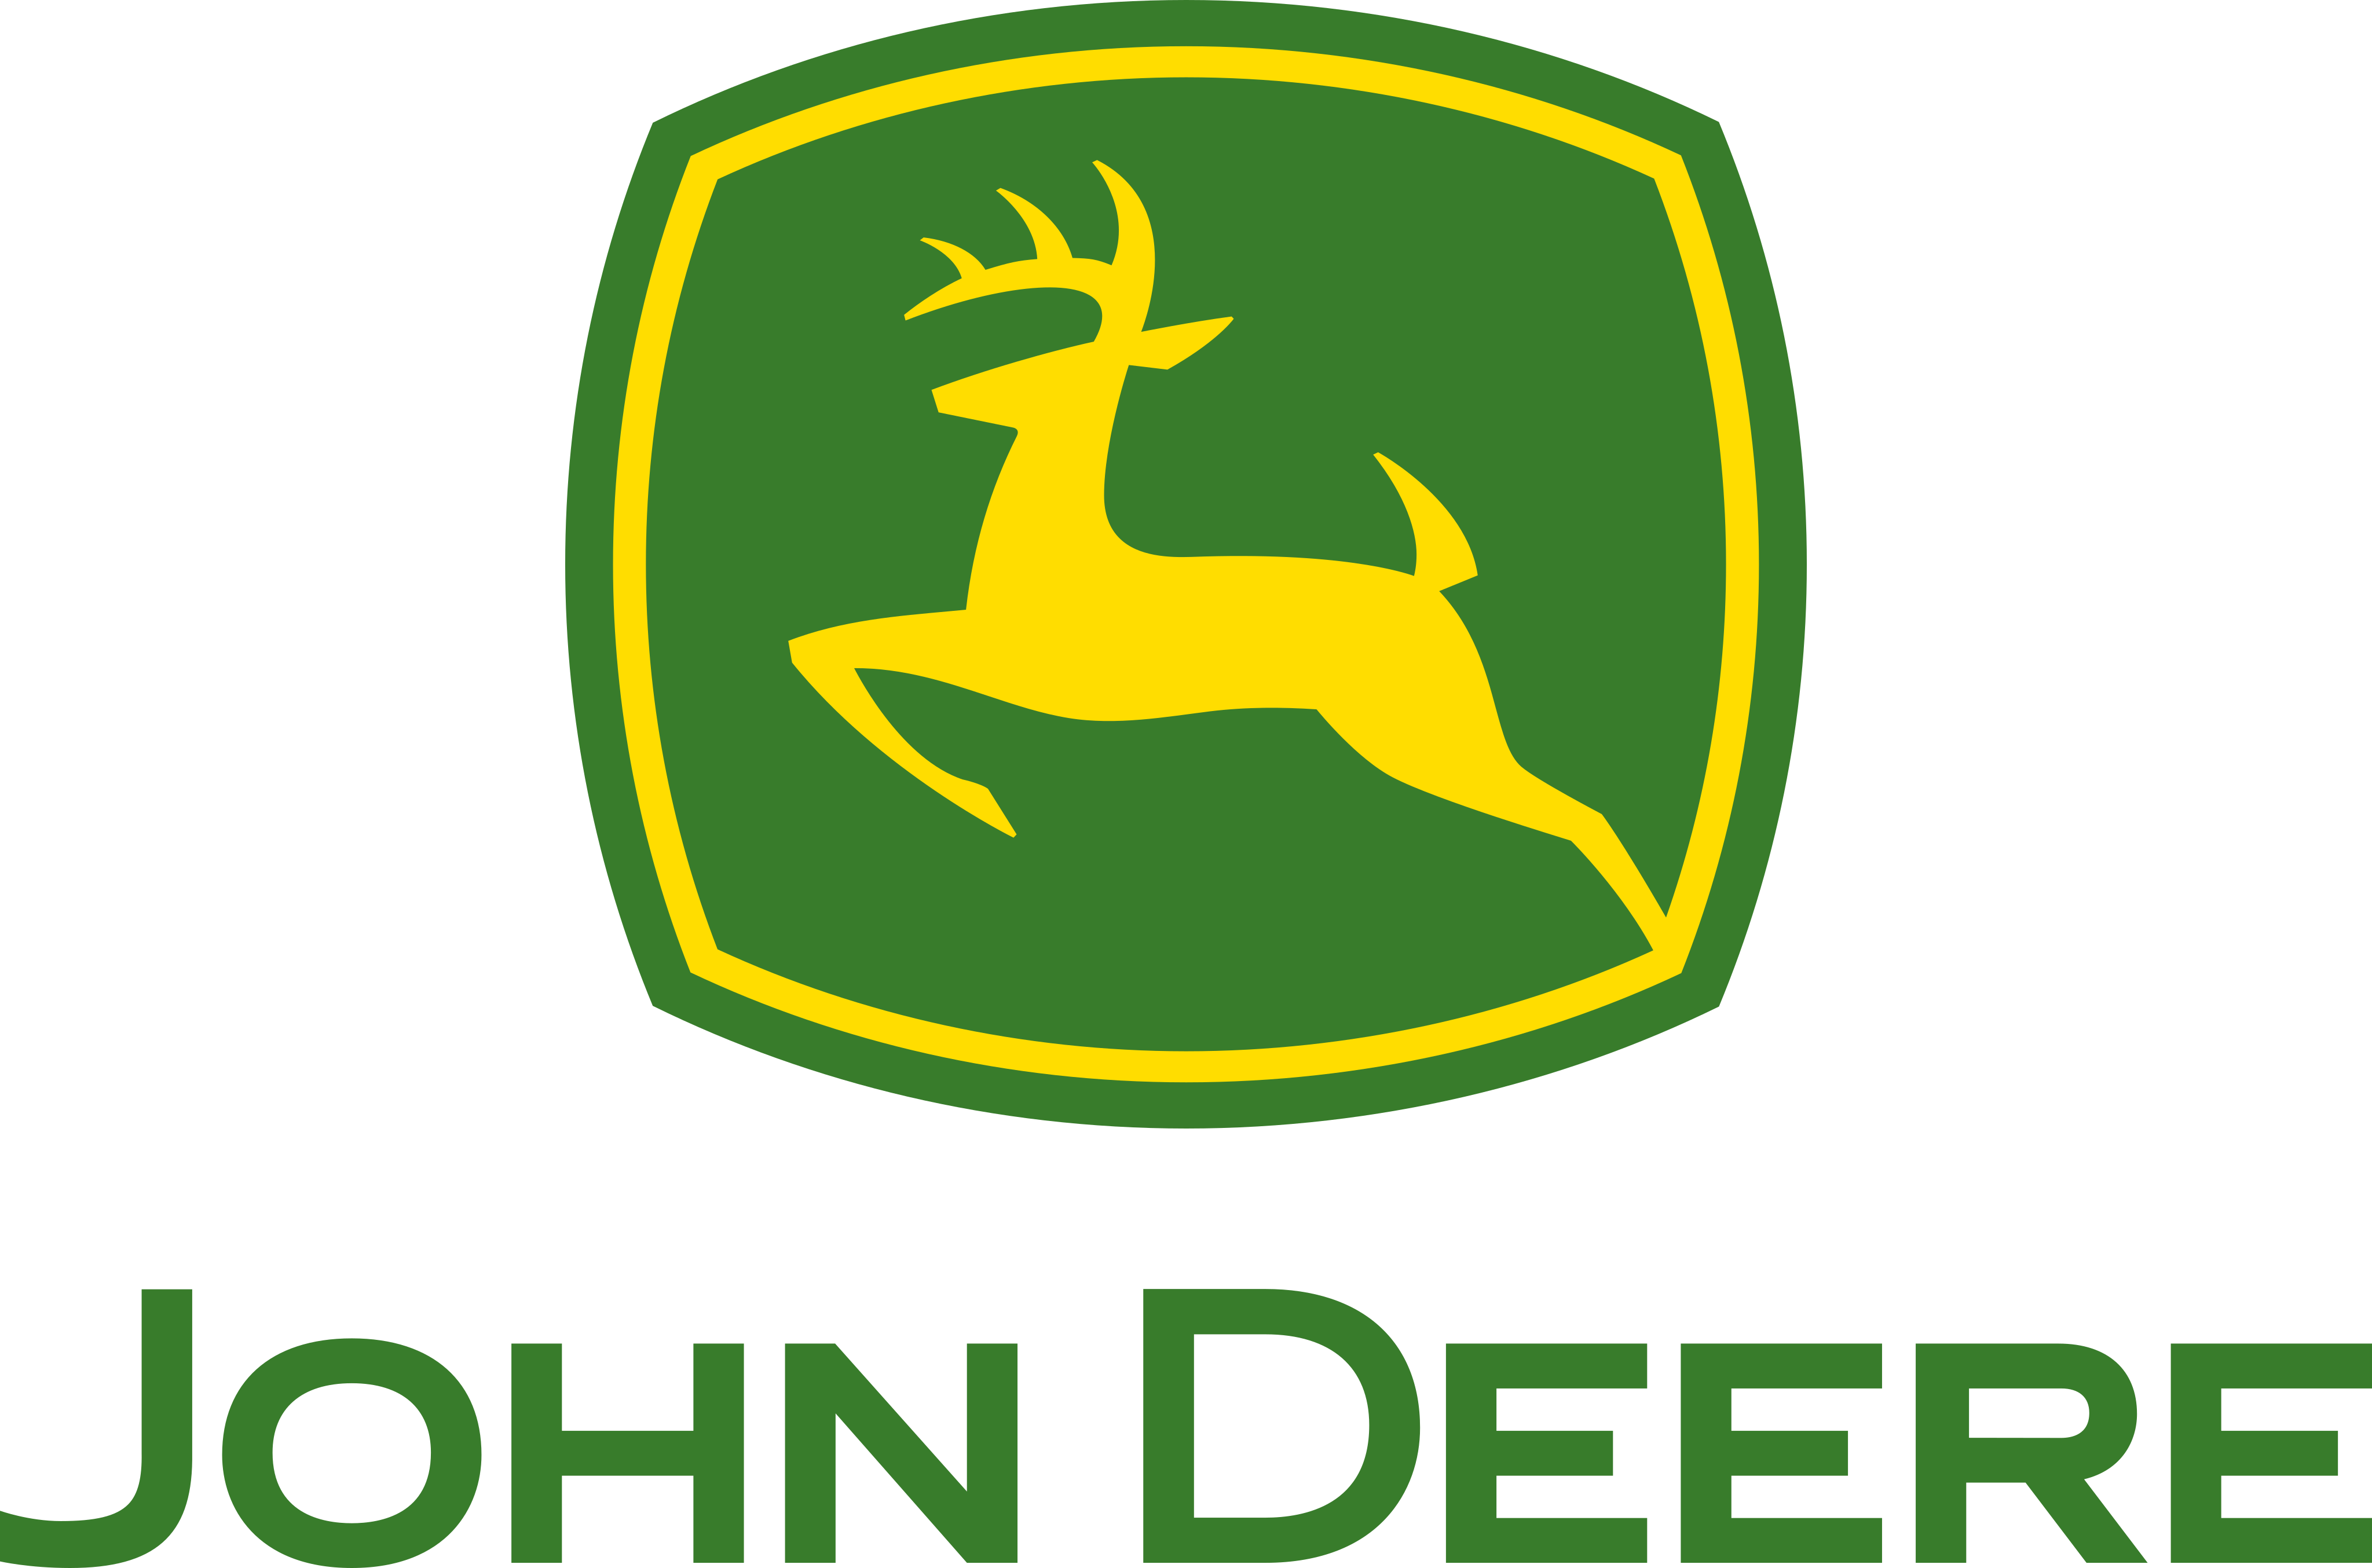 John Deere - Logo